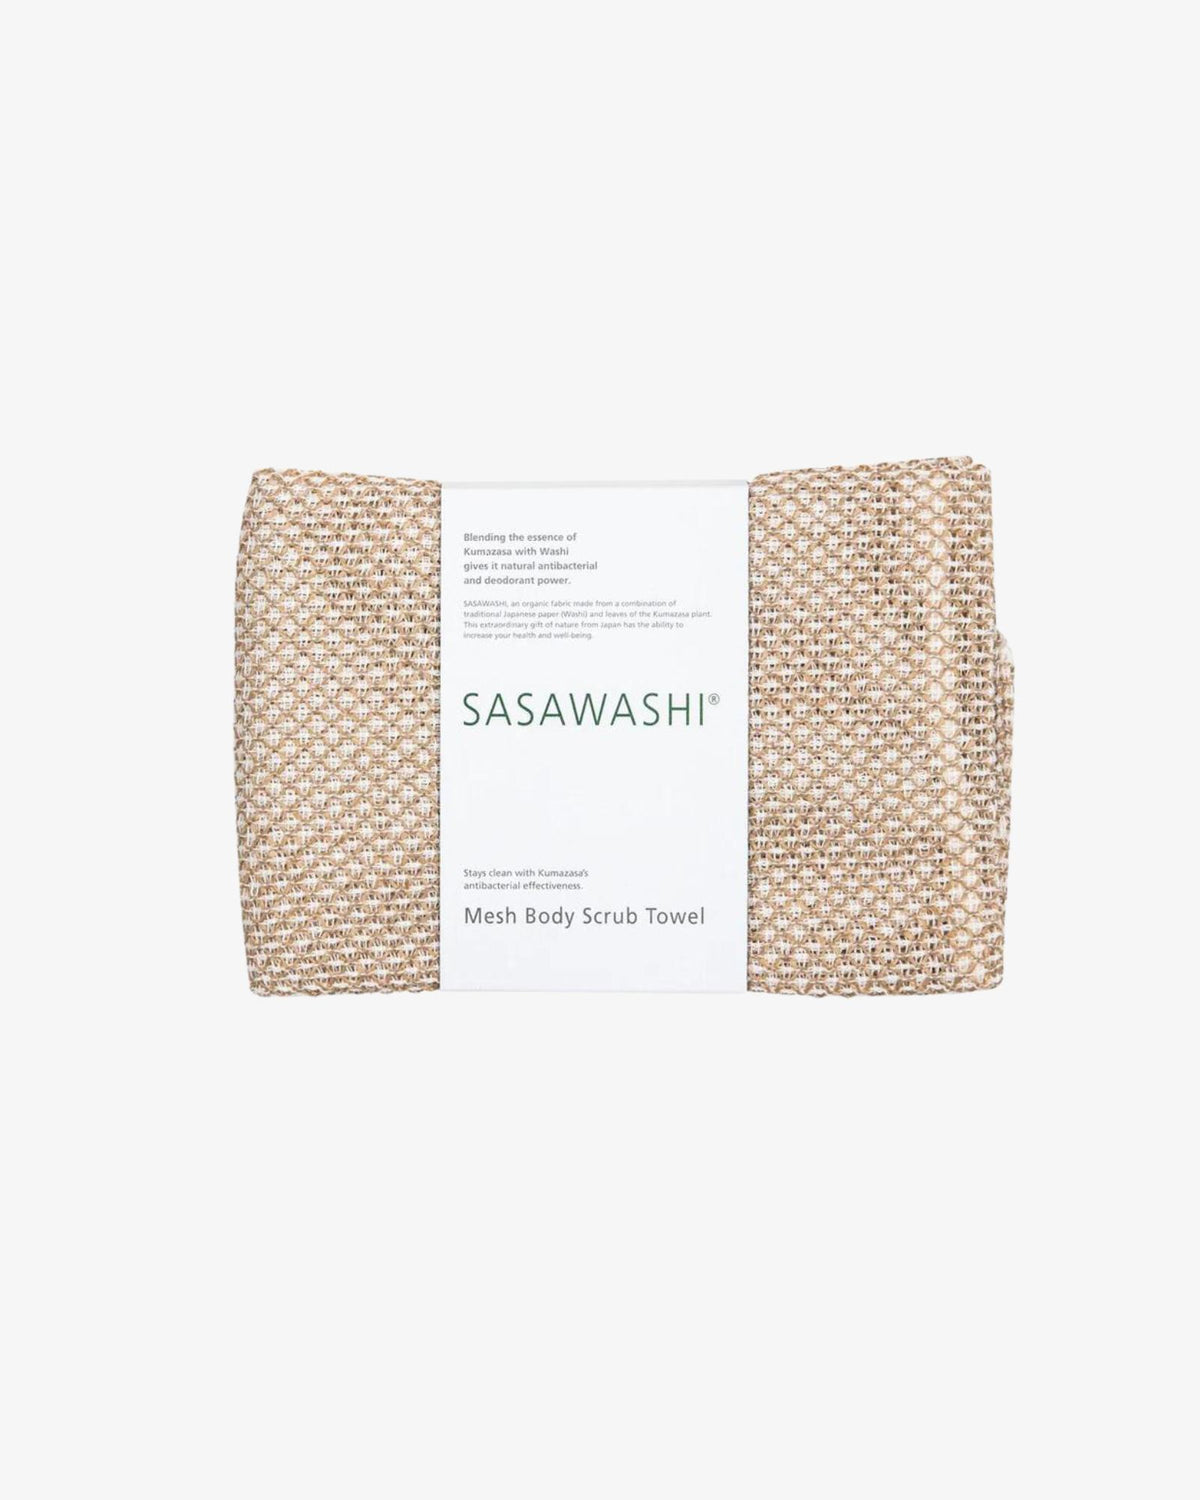 Mesh Body Scrub Towel by Sasawashi